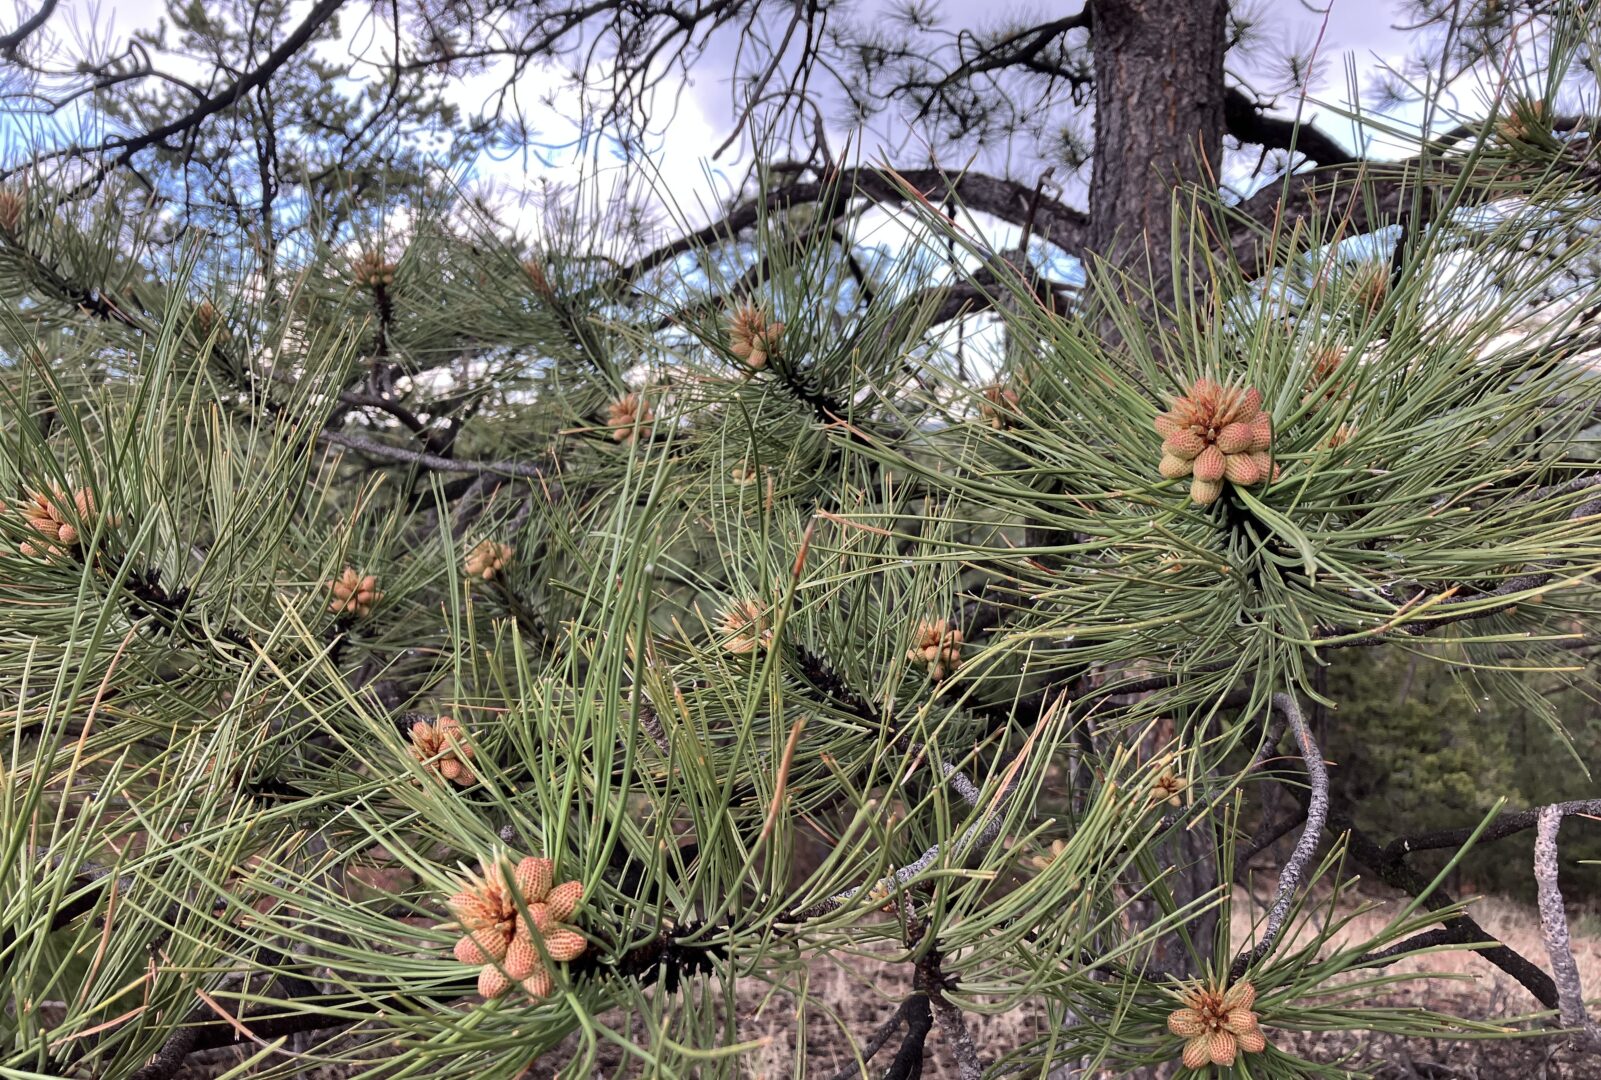 Ponderosa pine tree in the Santa Fe National Forest